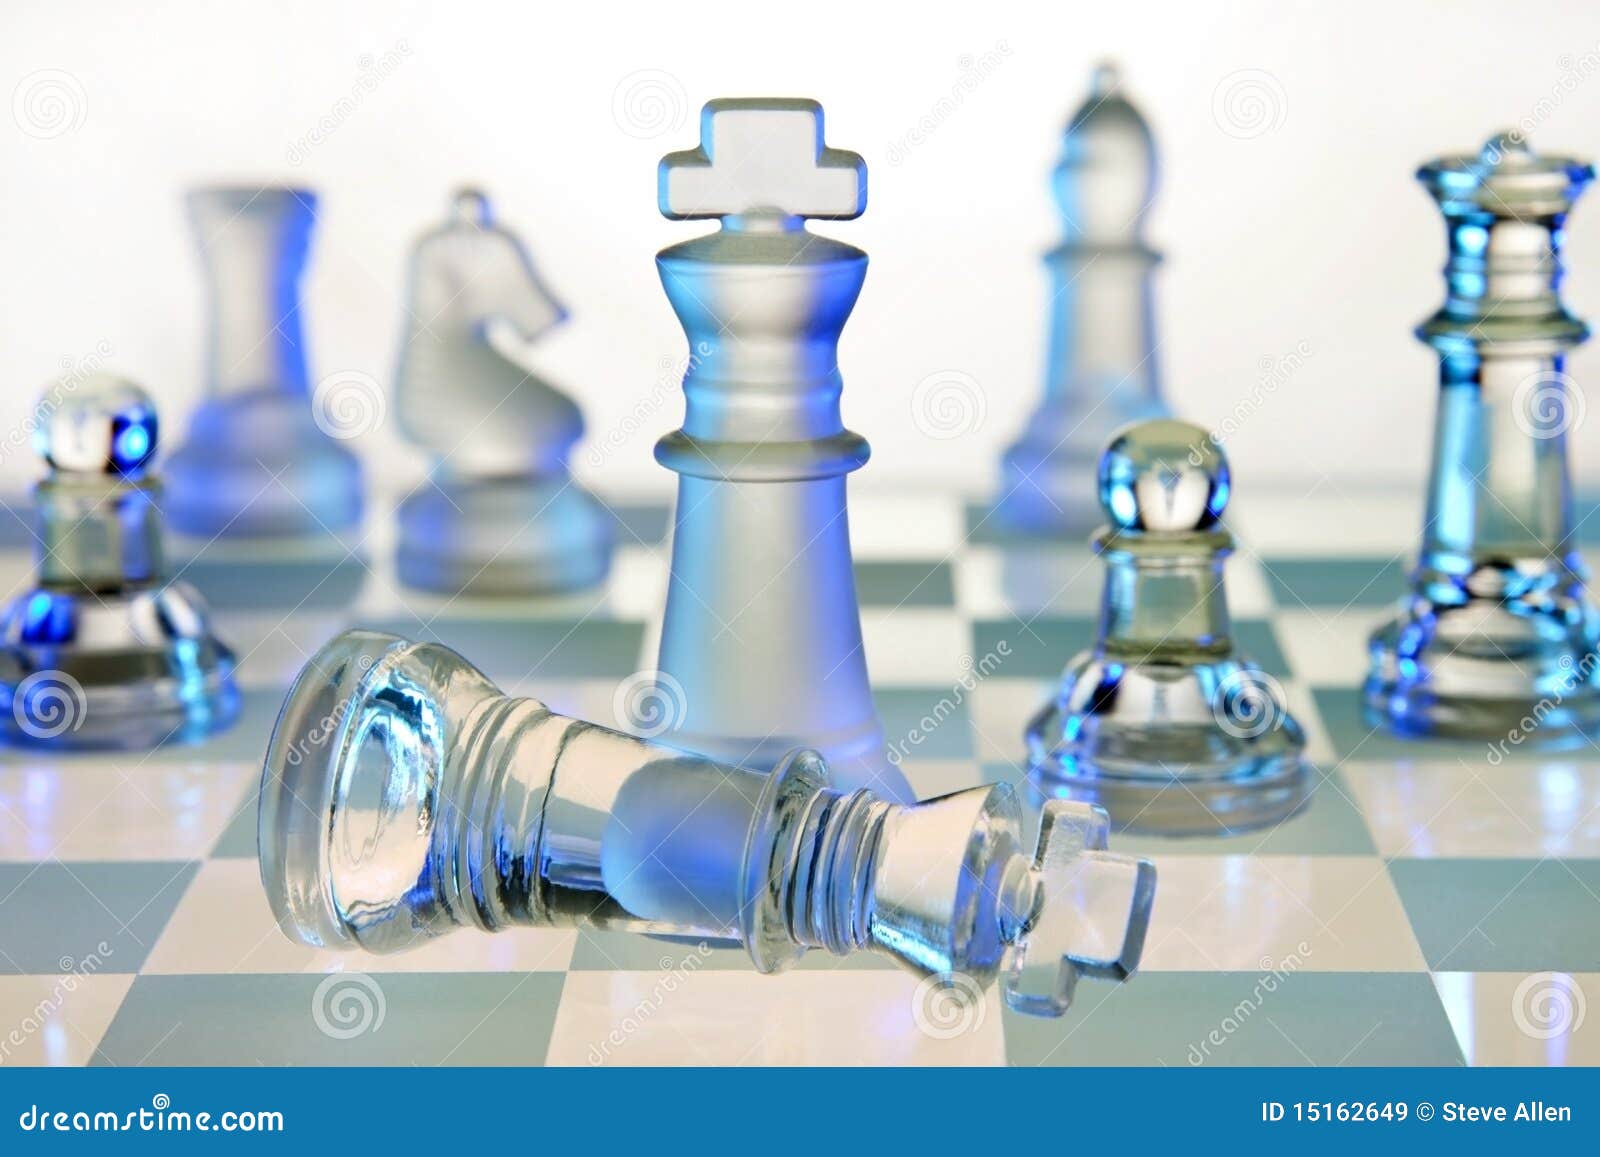 250+ Torneio De Xadrez fotos de stock, imagens e fotos royalty-free - iStock